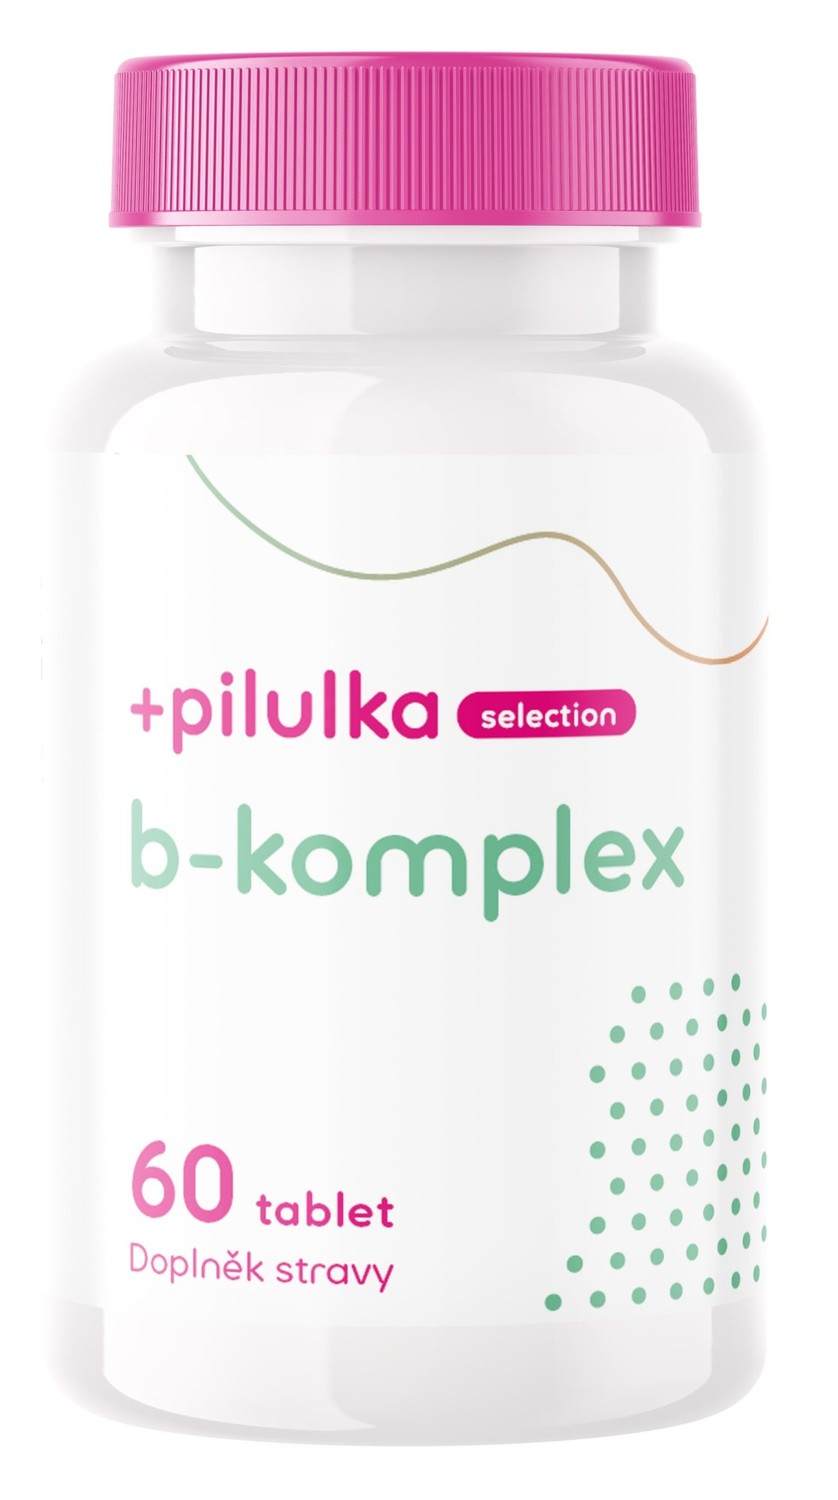 Pilulka Selection B - komplex